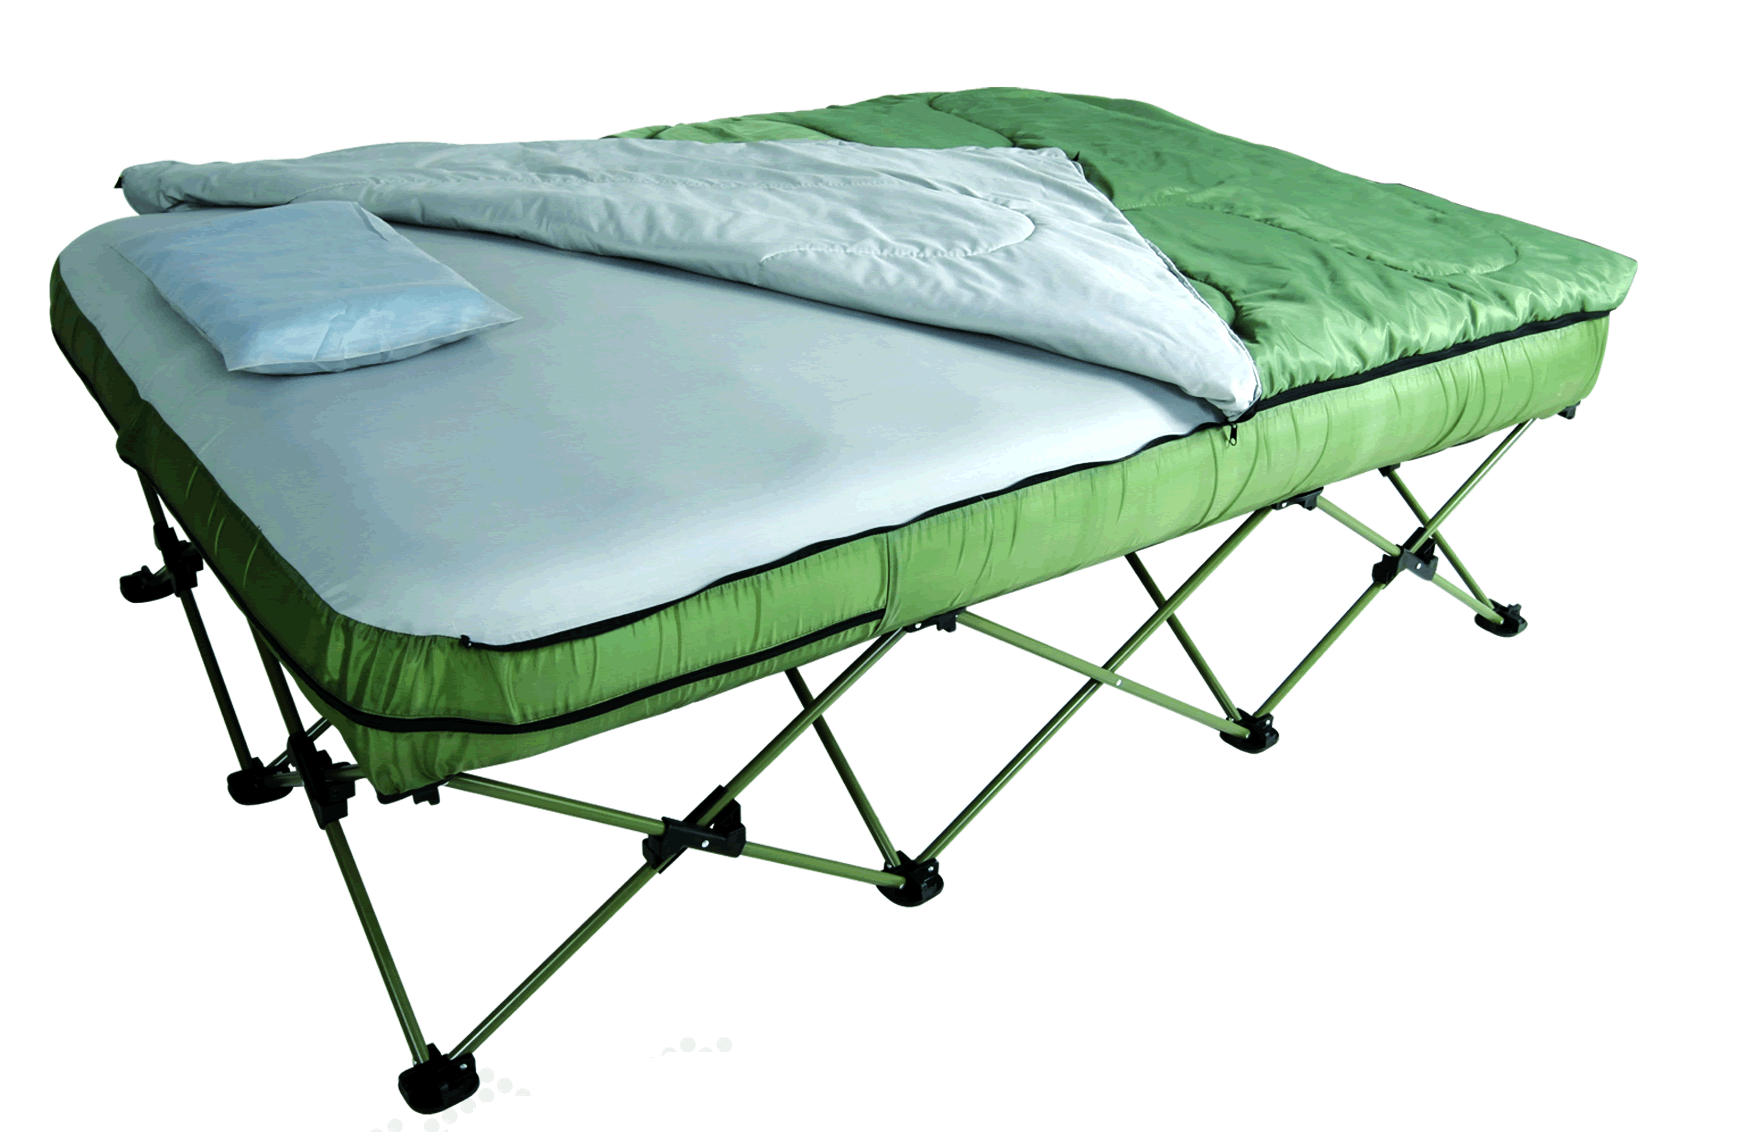 Air mattress frame for camping